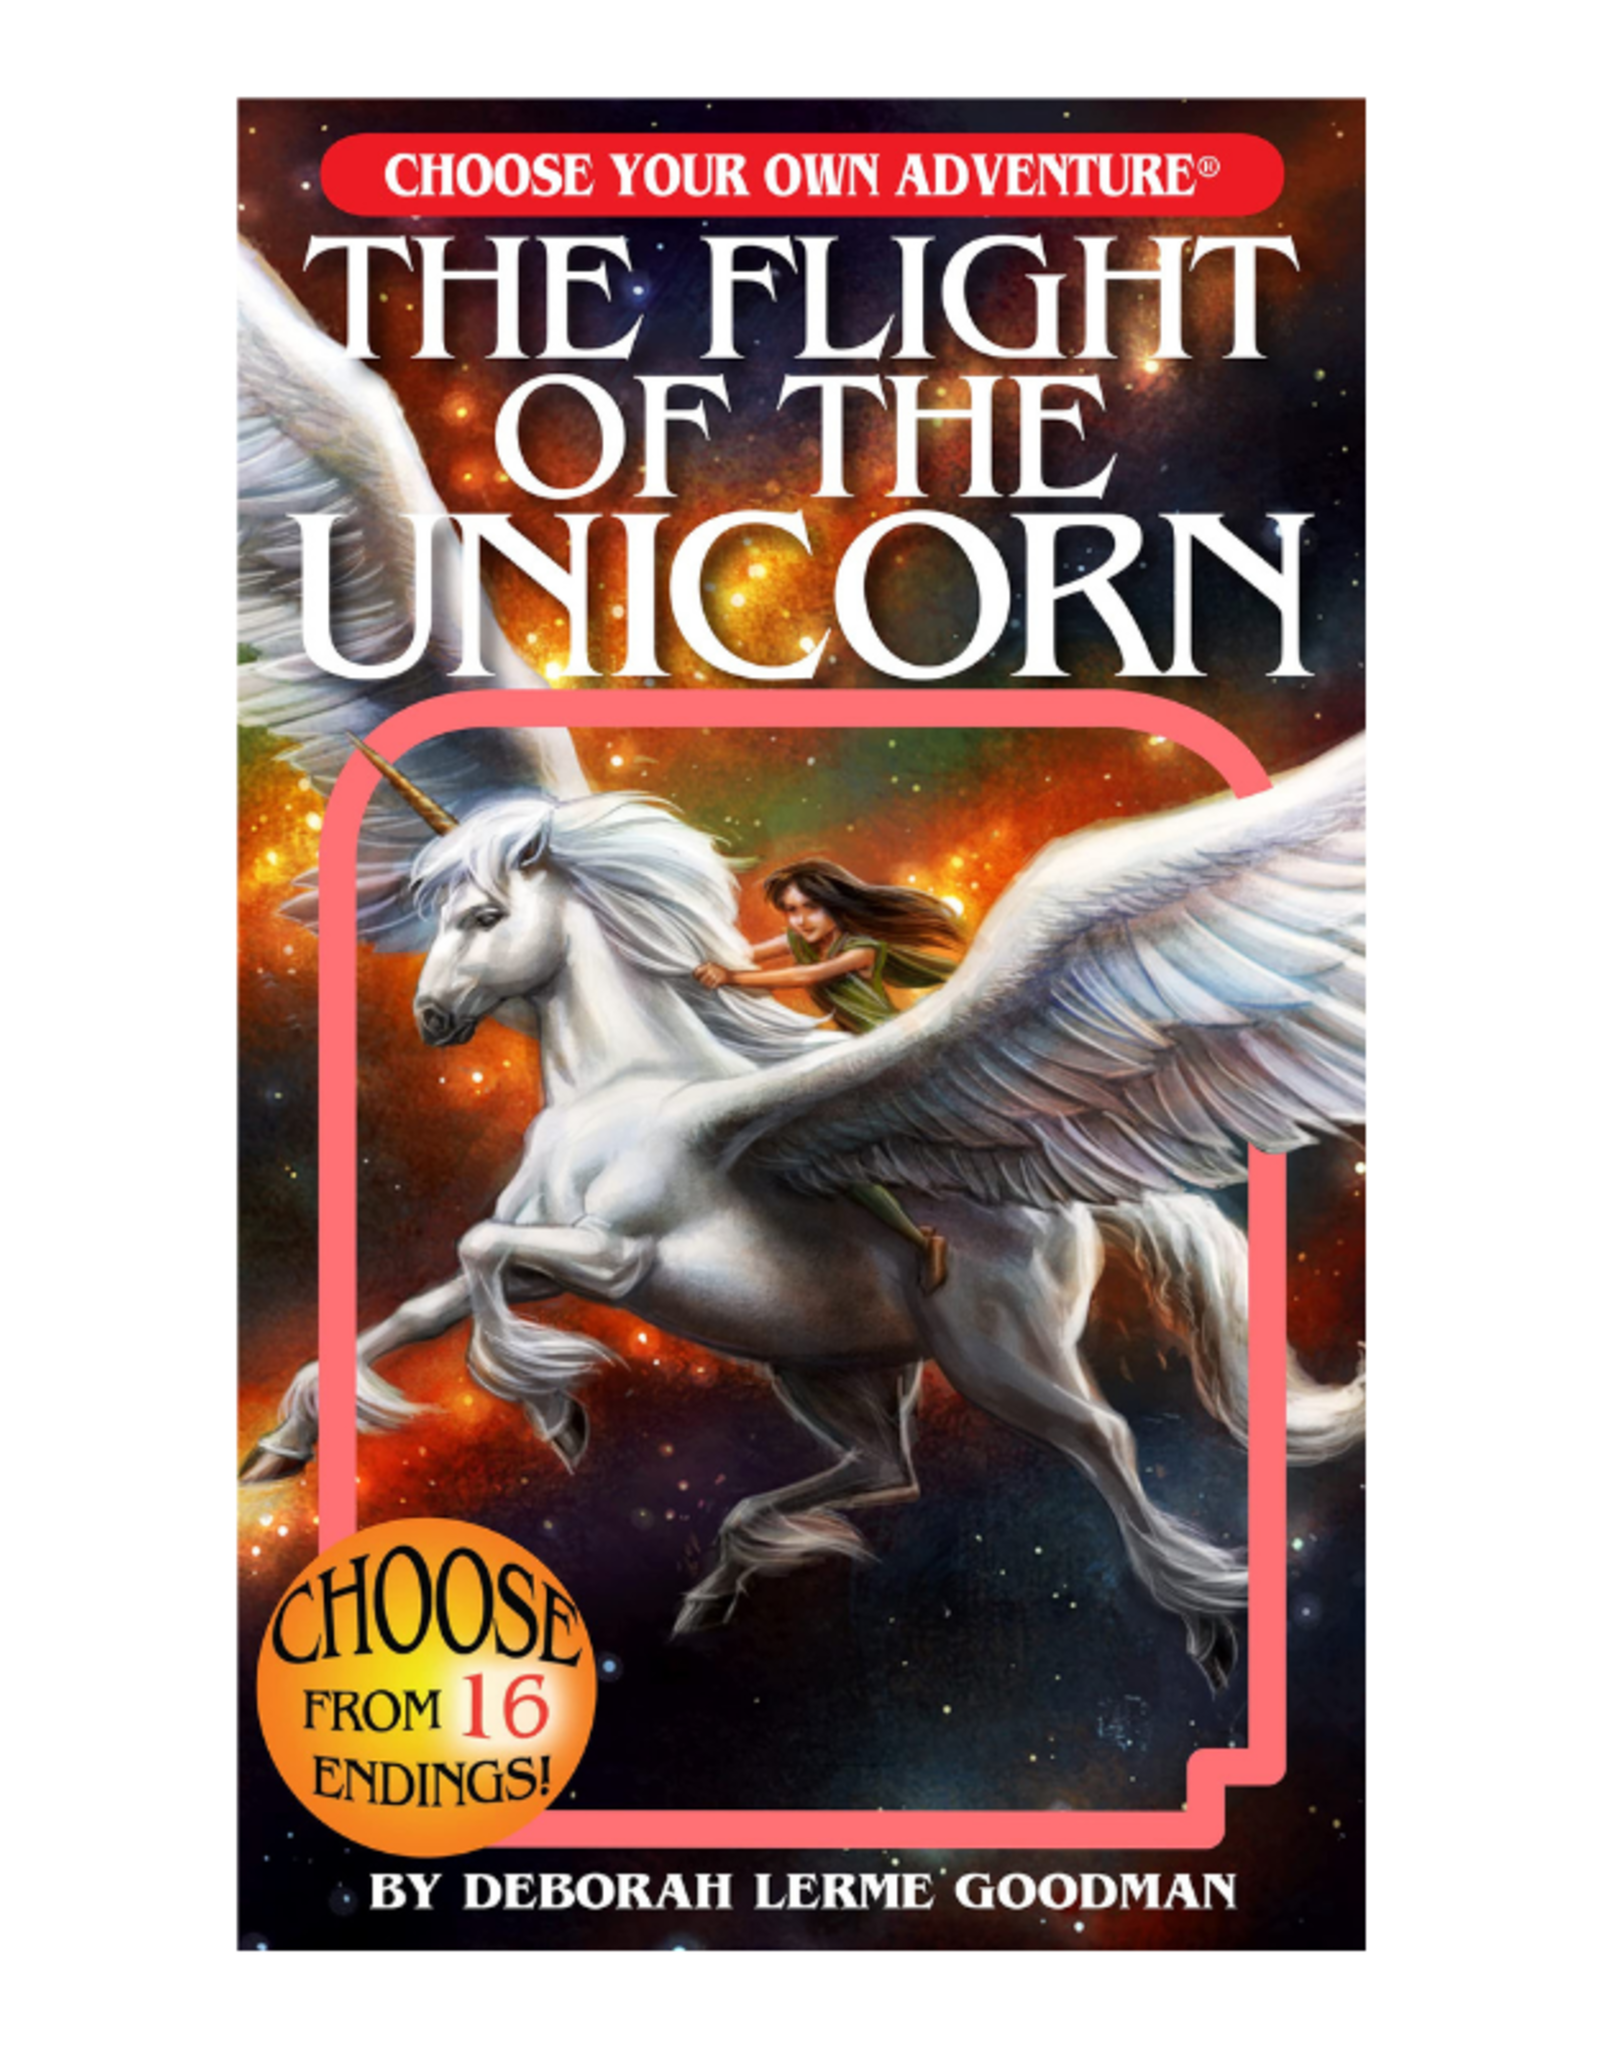 The Flight of the Unicorn